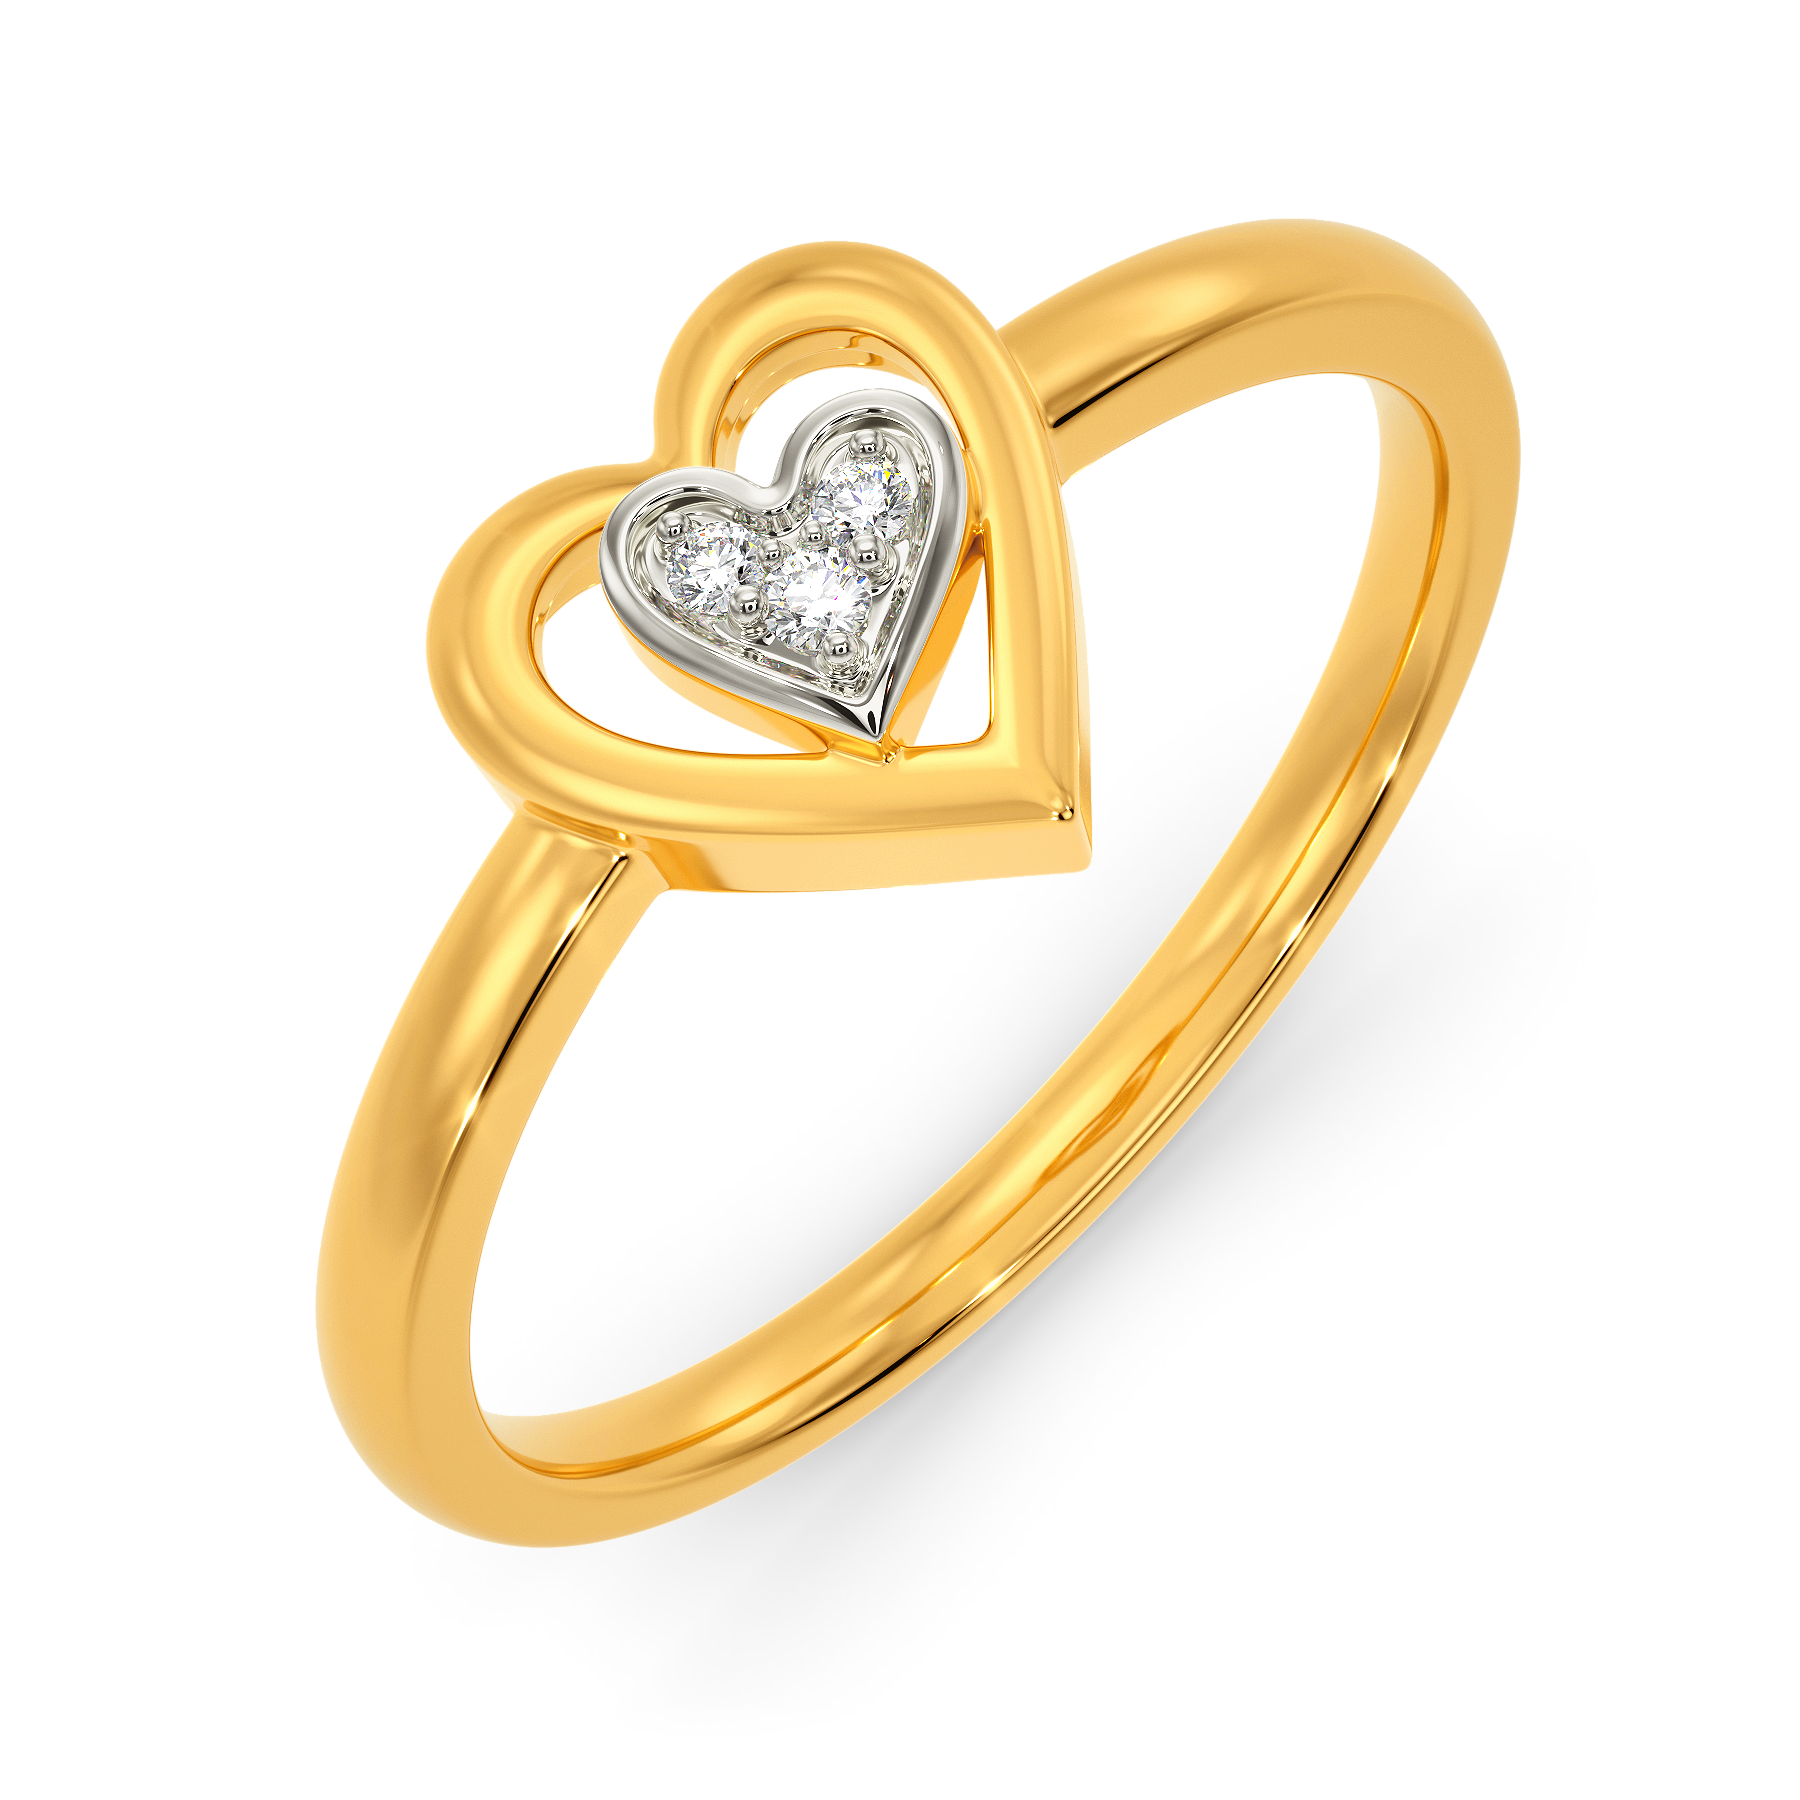 Lumen Latest Stylish Couple Ring Heart Design Silver Colour For Girls Boys  Women Men Husband Wife.